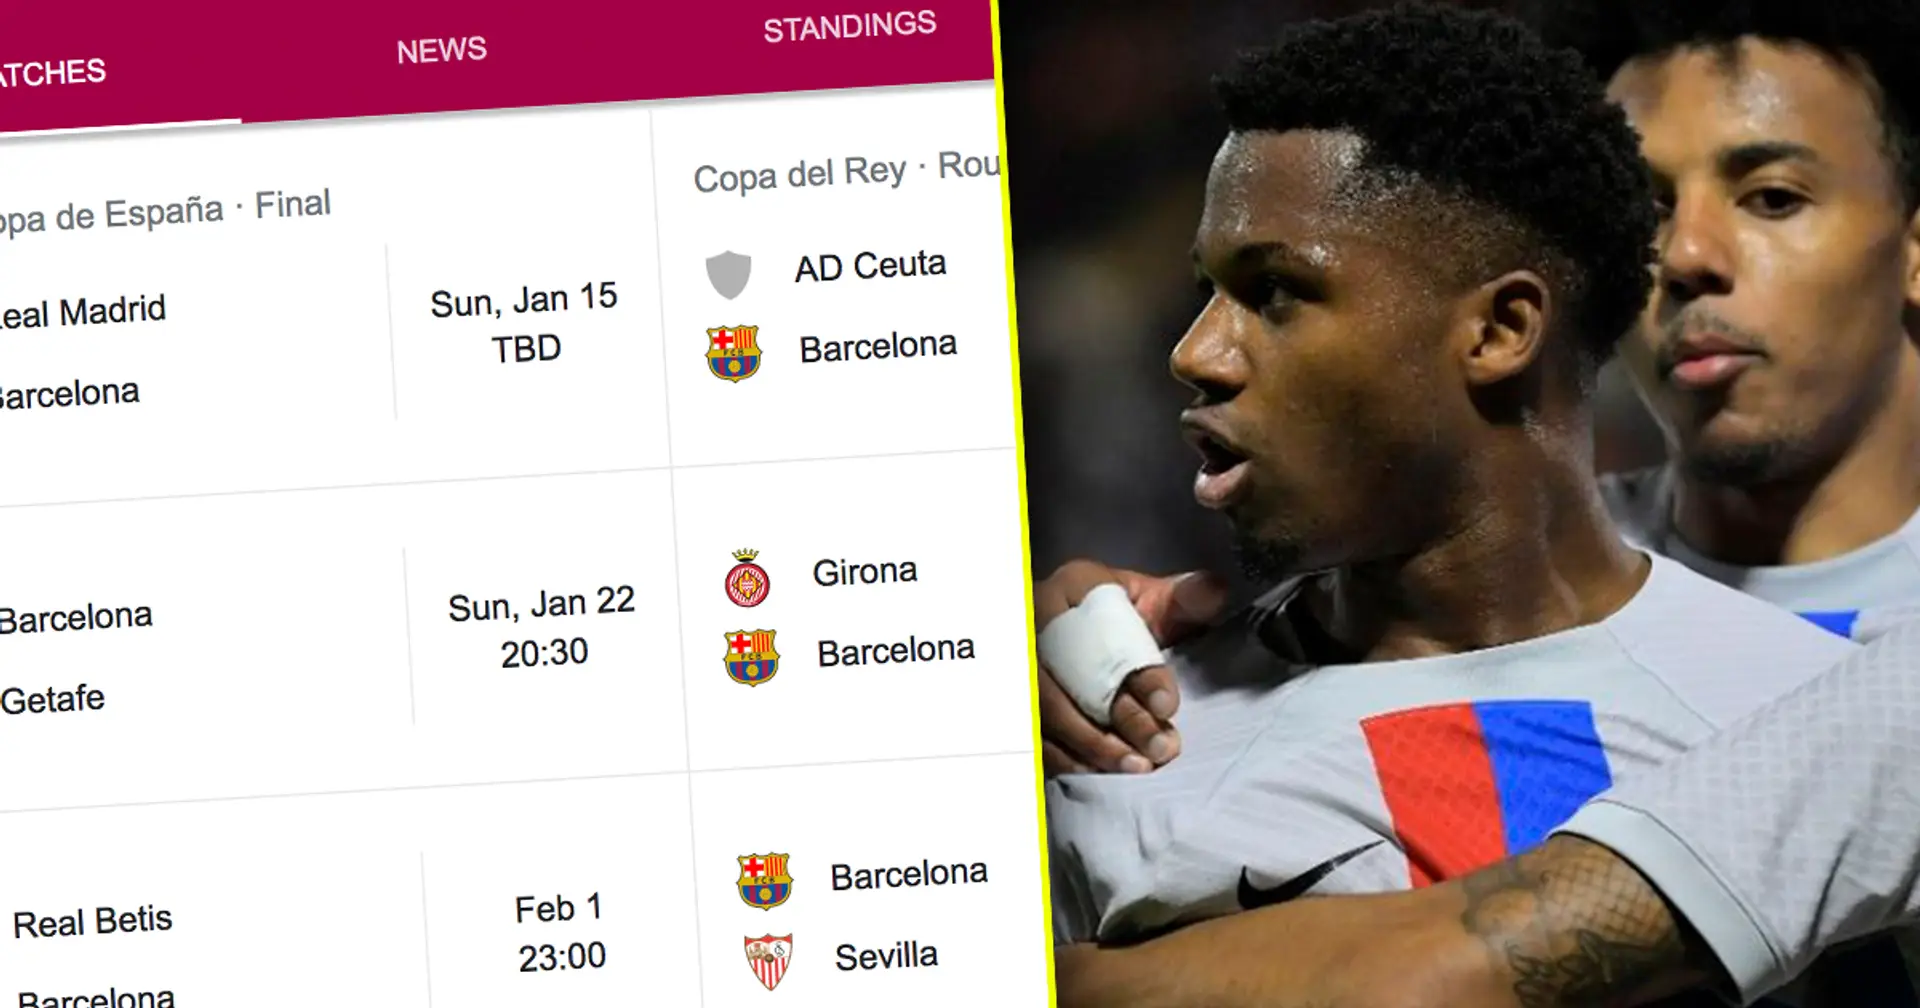 Barca's next 5 games as date of Copa del Rey clash confirmed